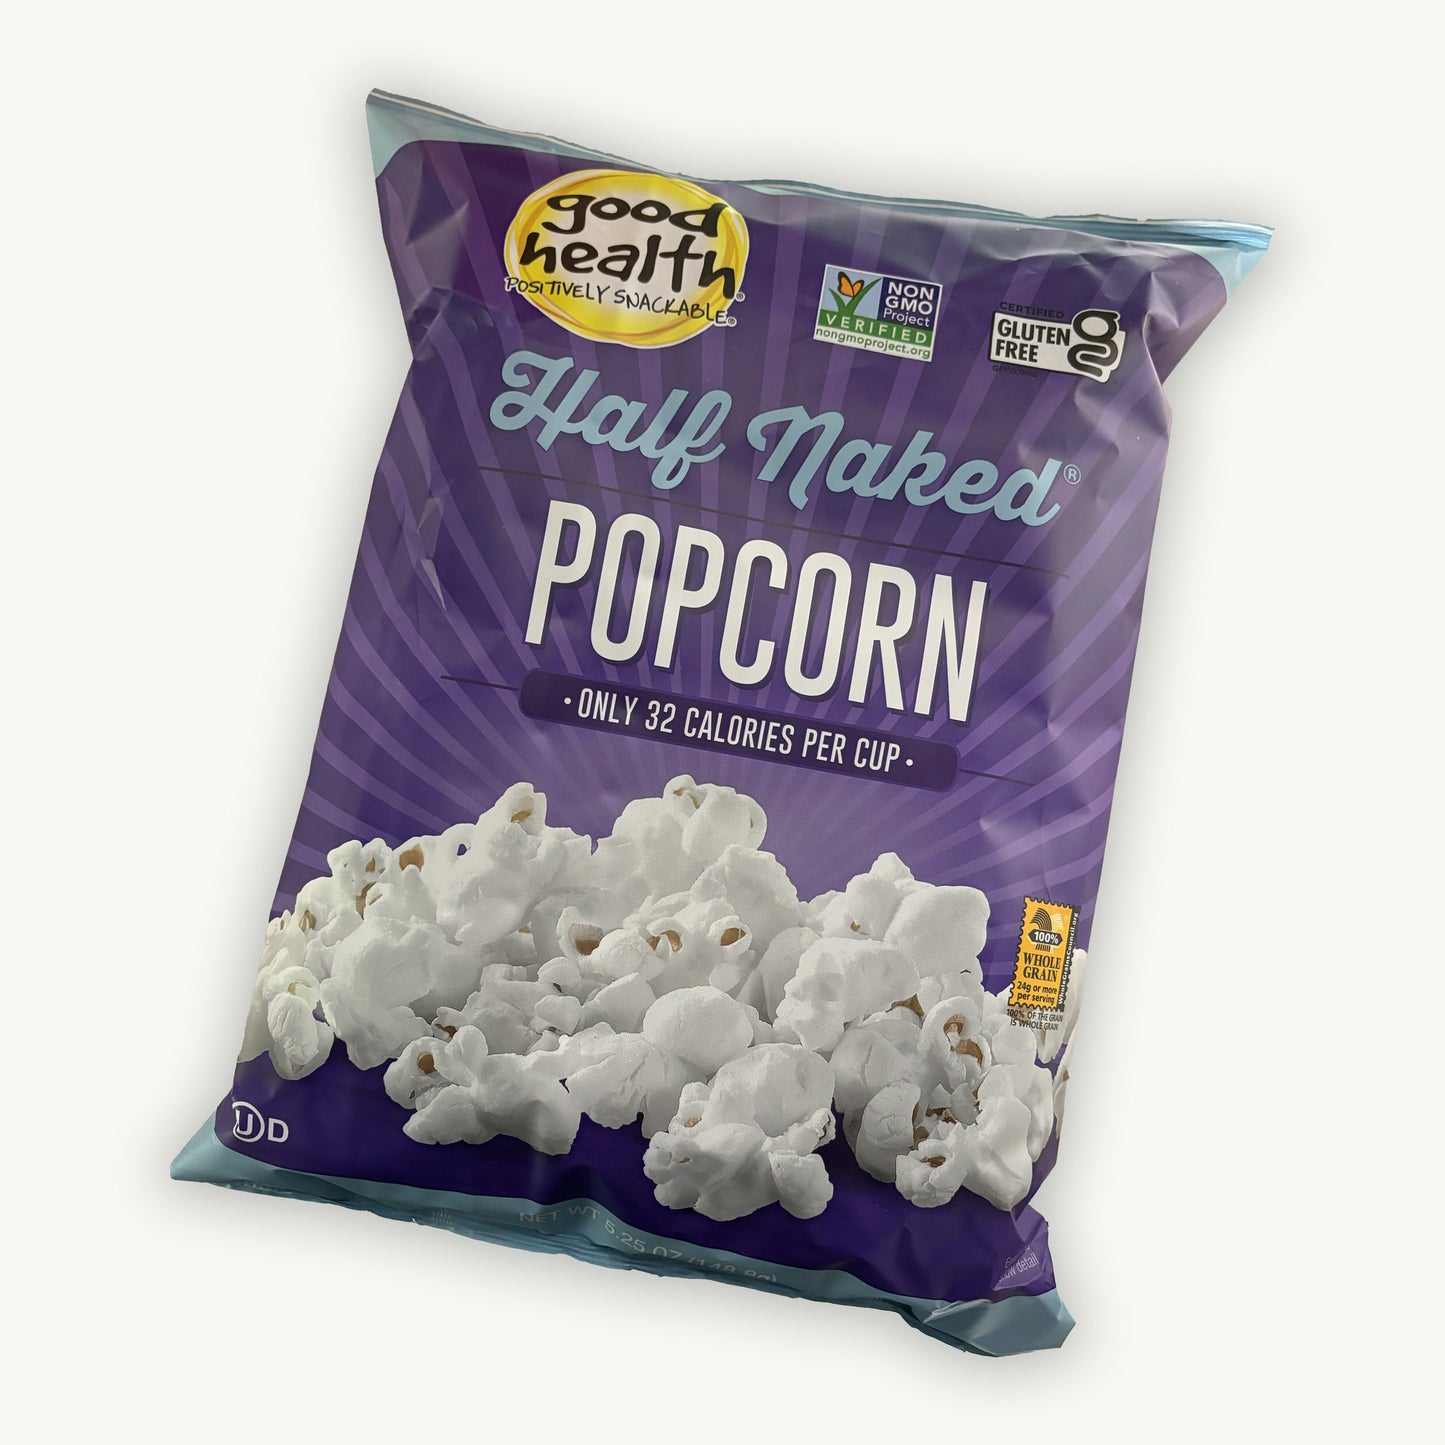 Good Health Half Naked Popcorn 5.25oz